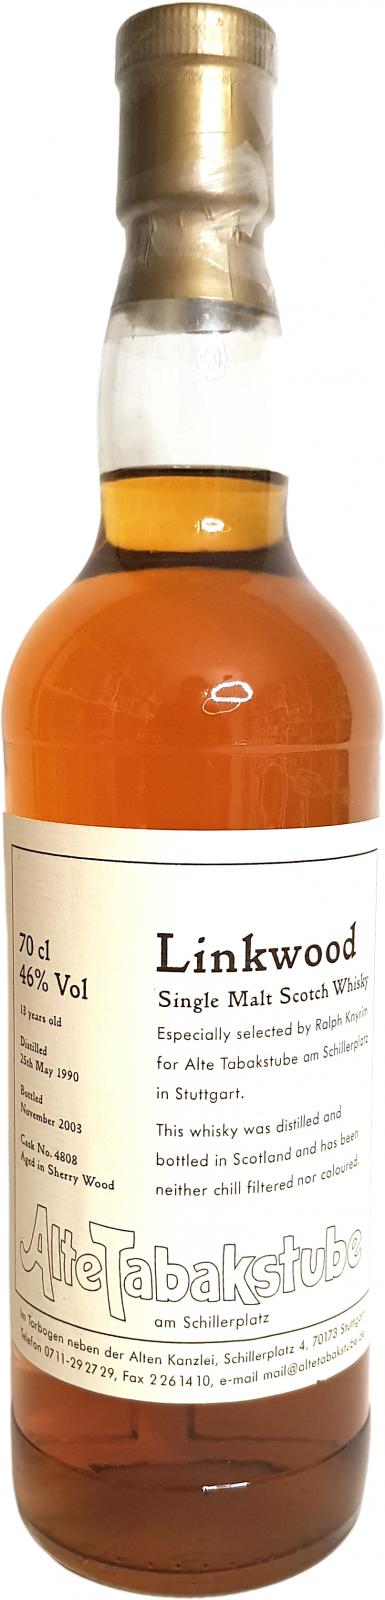 Linkwood 1990 at Sherry Wood 4808 46% 700ml